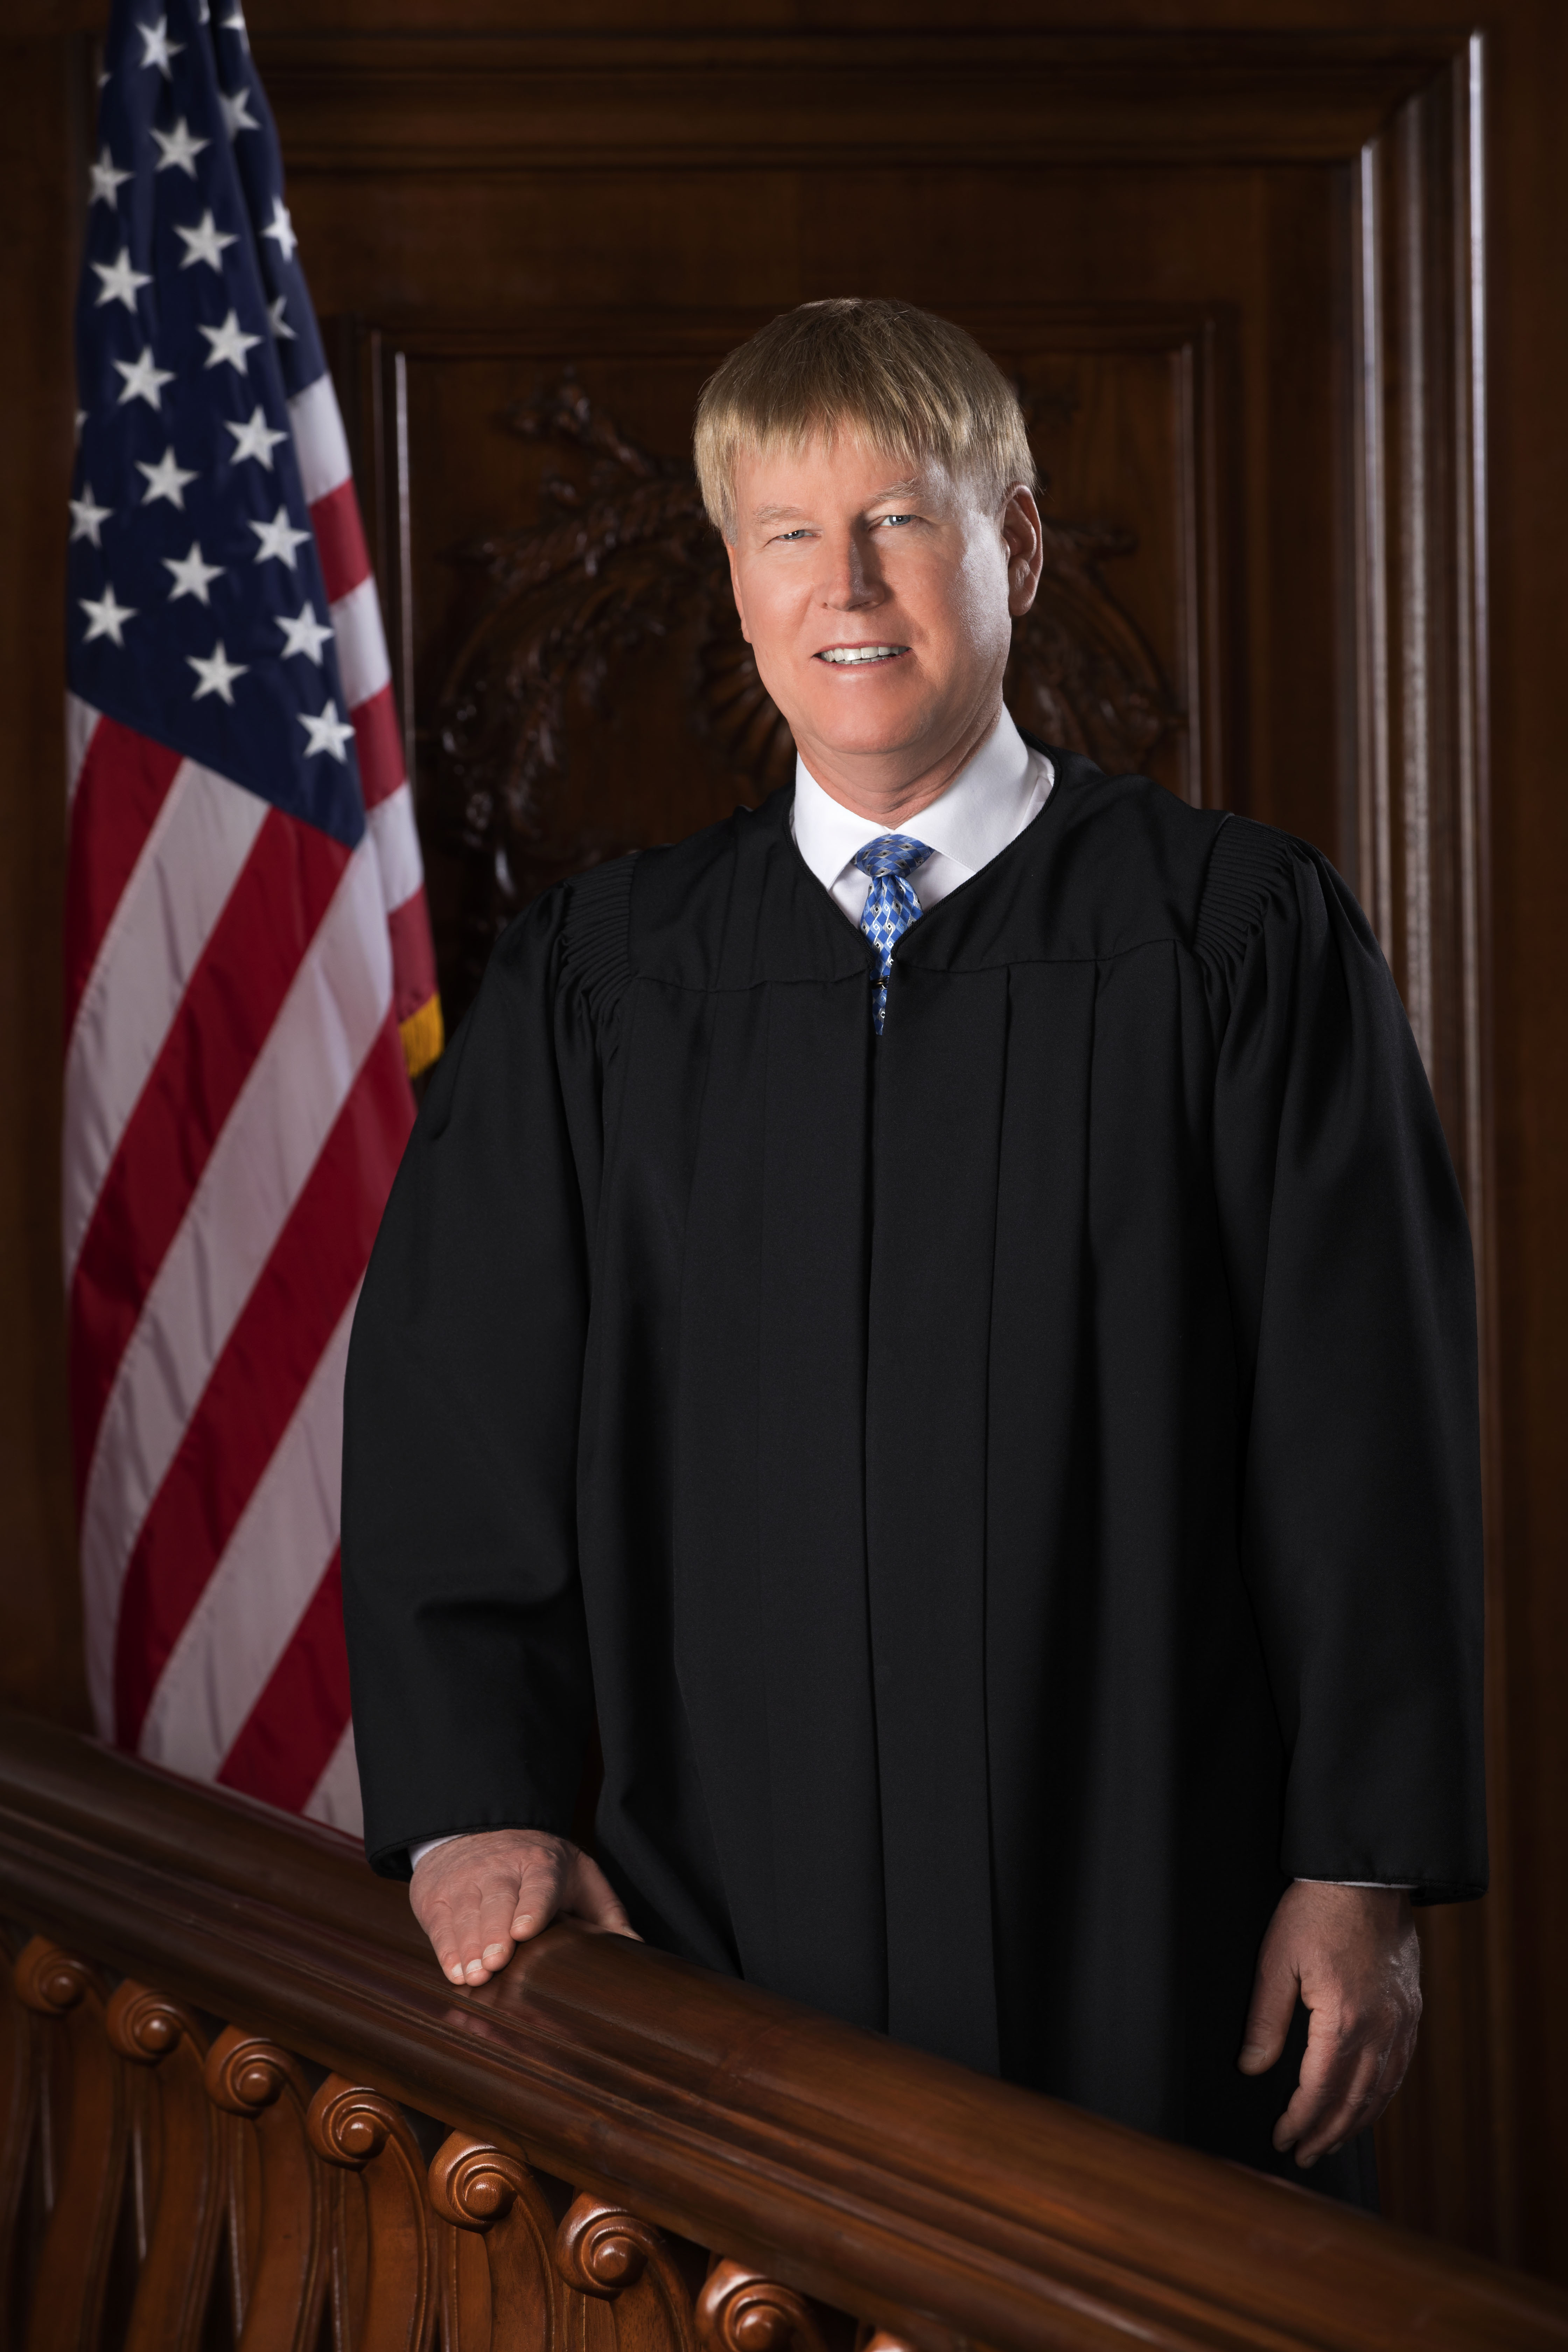 Judge Michael Gibbons